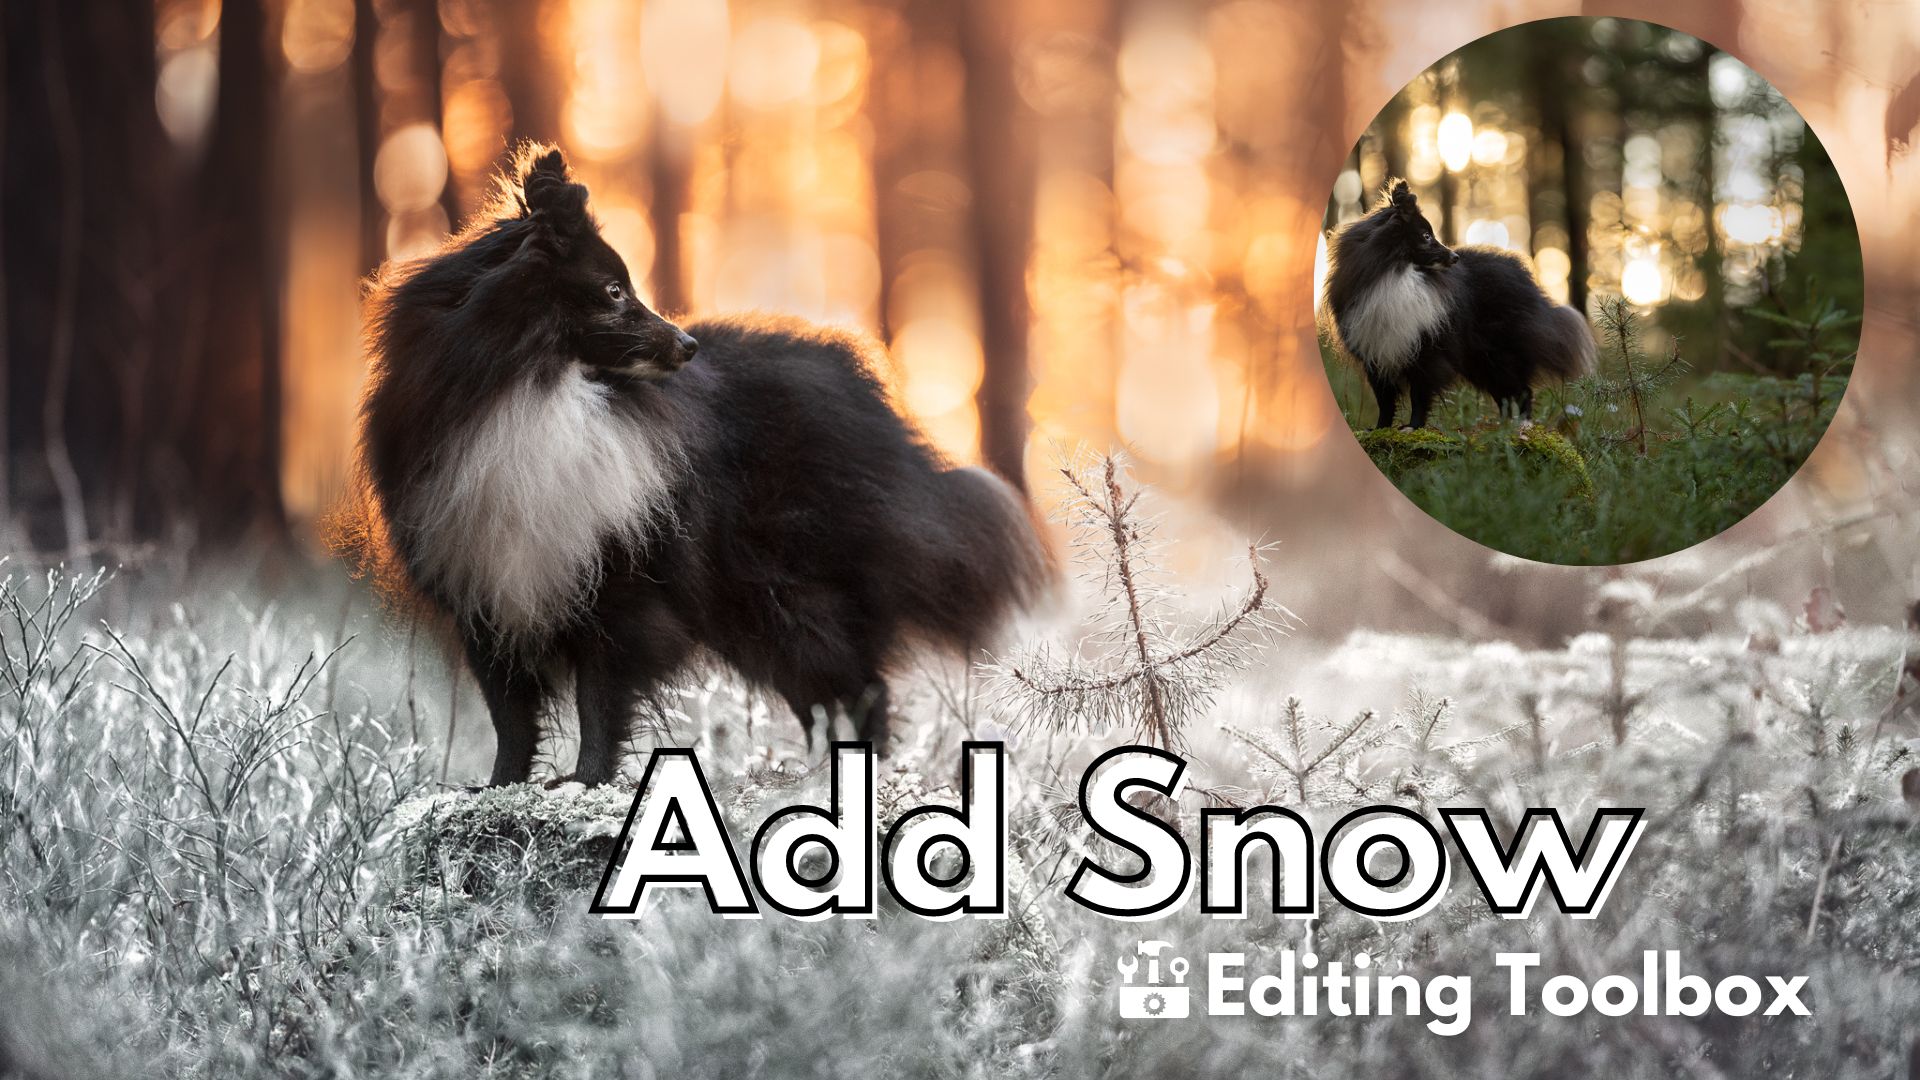 Editing Toolbox: Add Snow